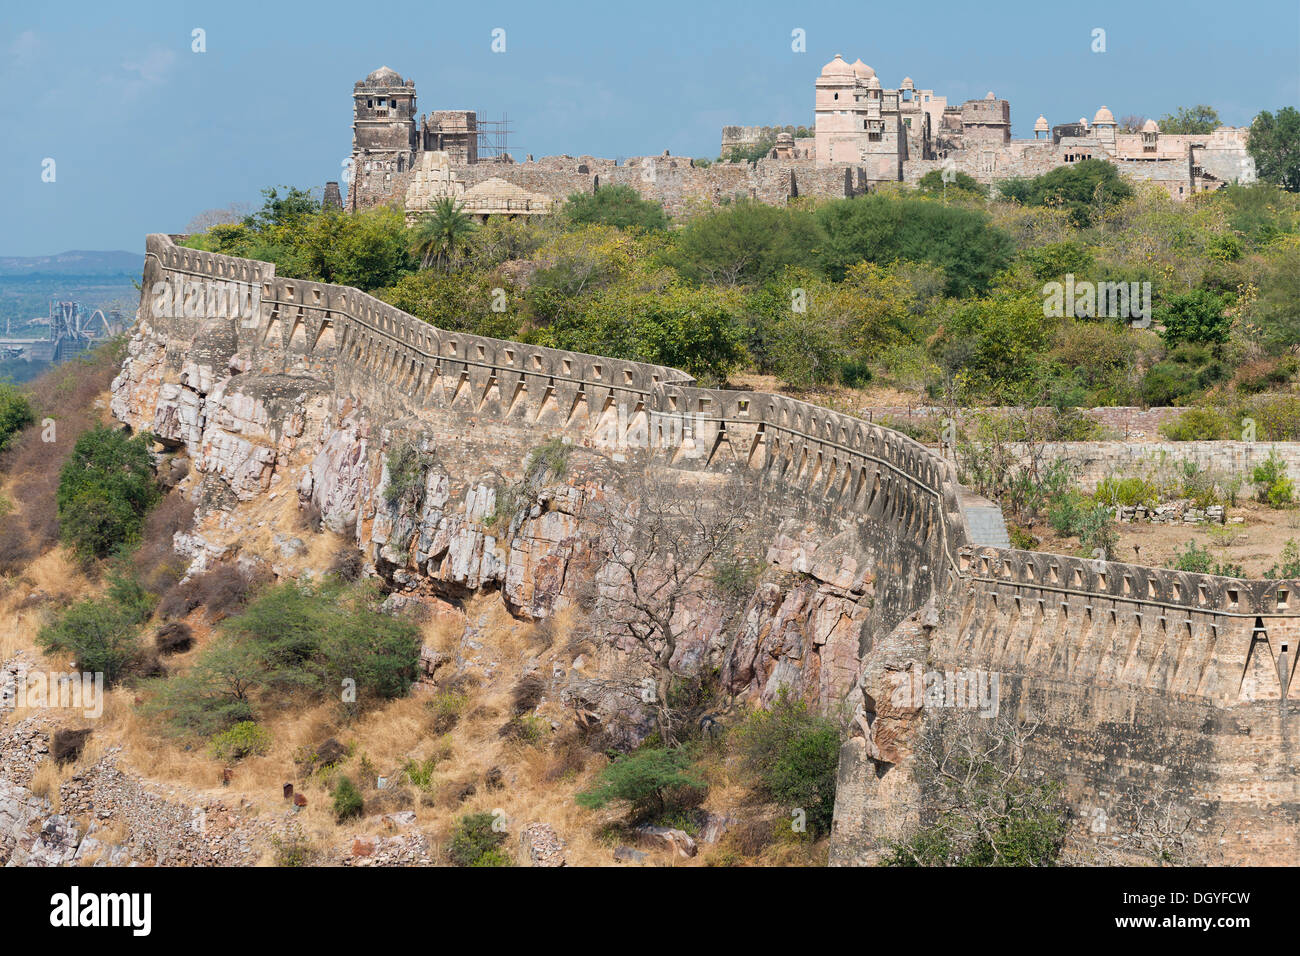 Enceinte fortifiée, Chittorgarh fort des princes Rajput hindou, Chittorgarh, Rajasthan, Inde Banque D'Images